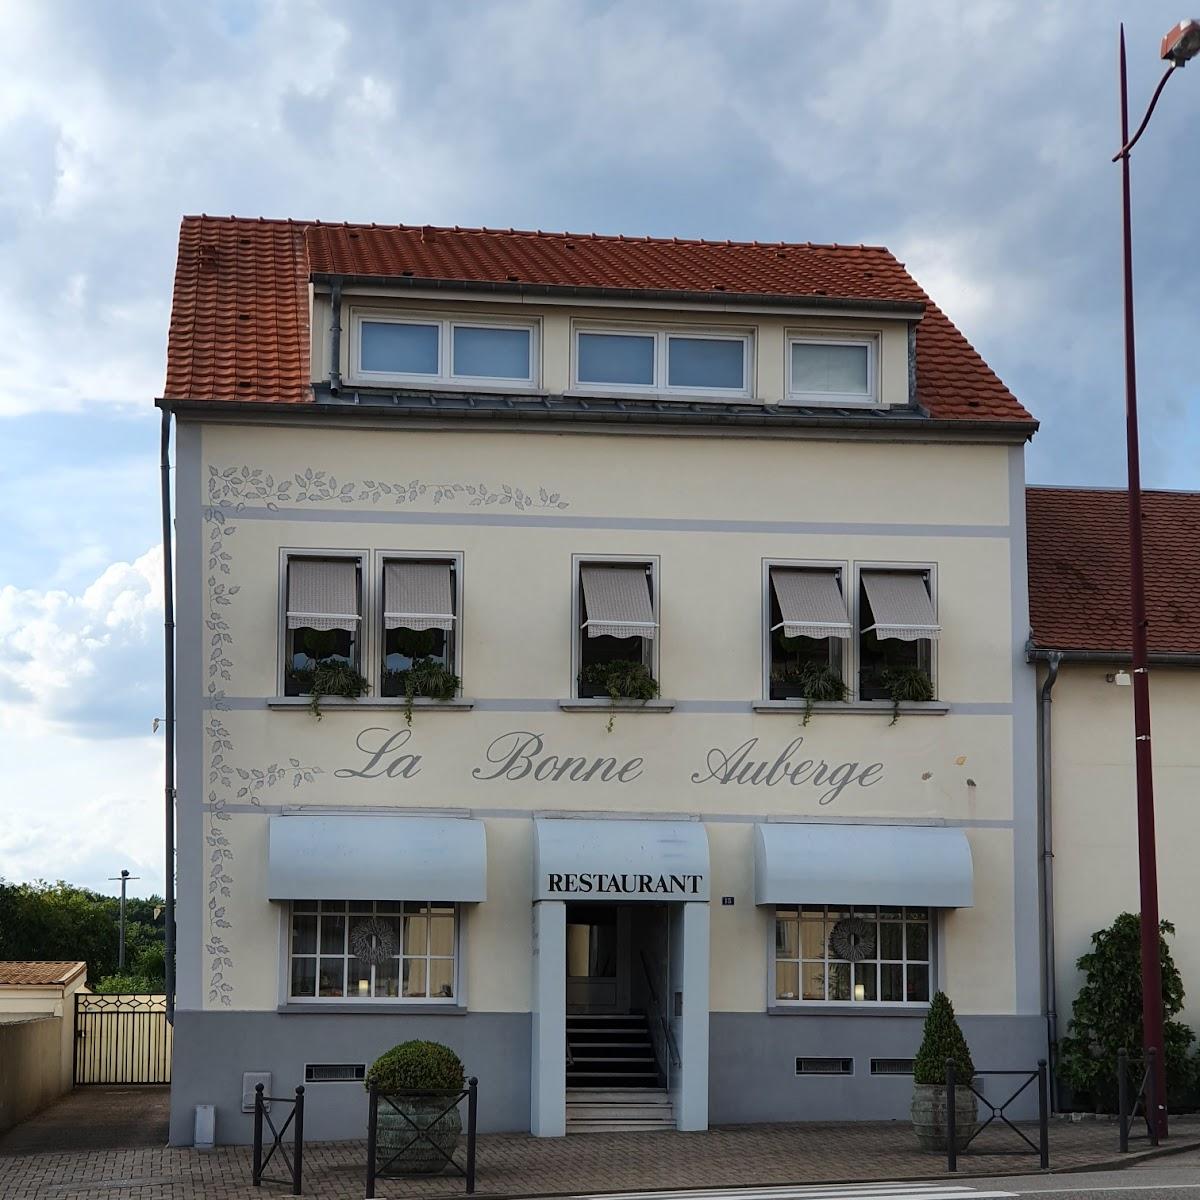 Restaurant "La Bonne Auberge" in Stiring-Wendel